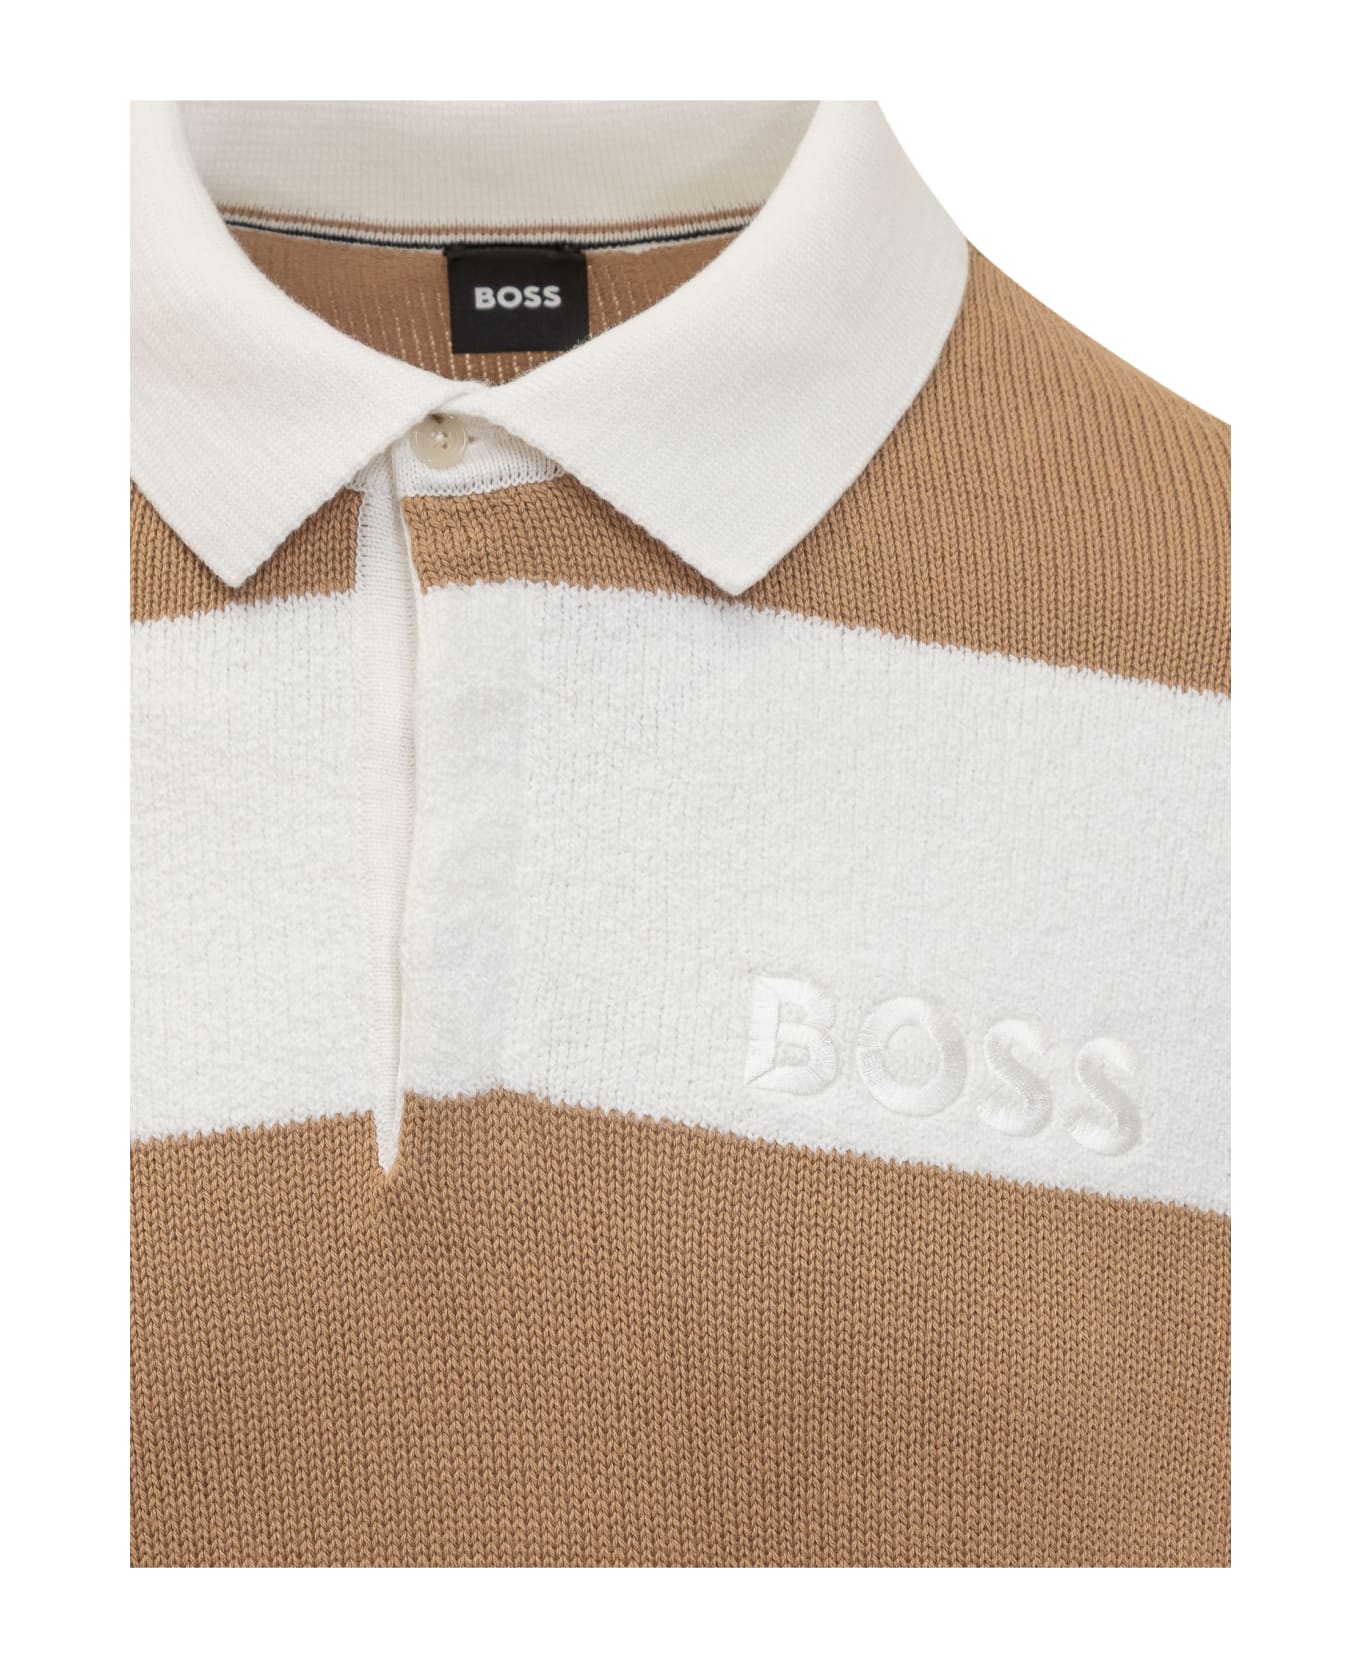 Hugo Boss Sweater With Logo - MEDIUM BEIGE